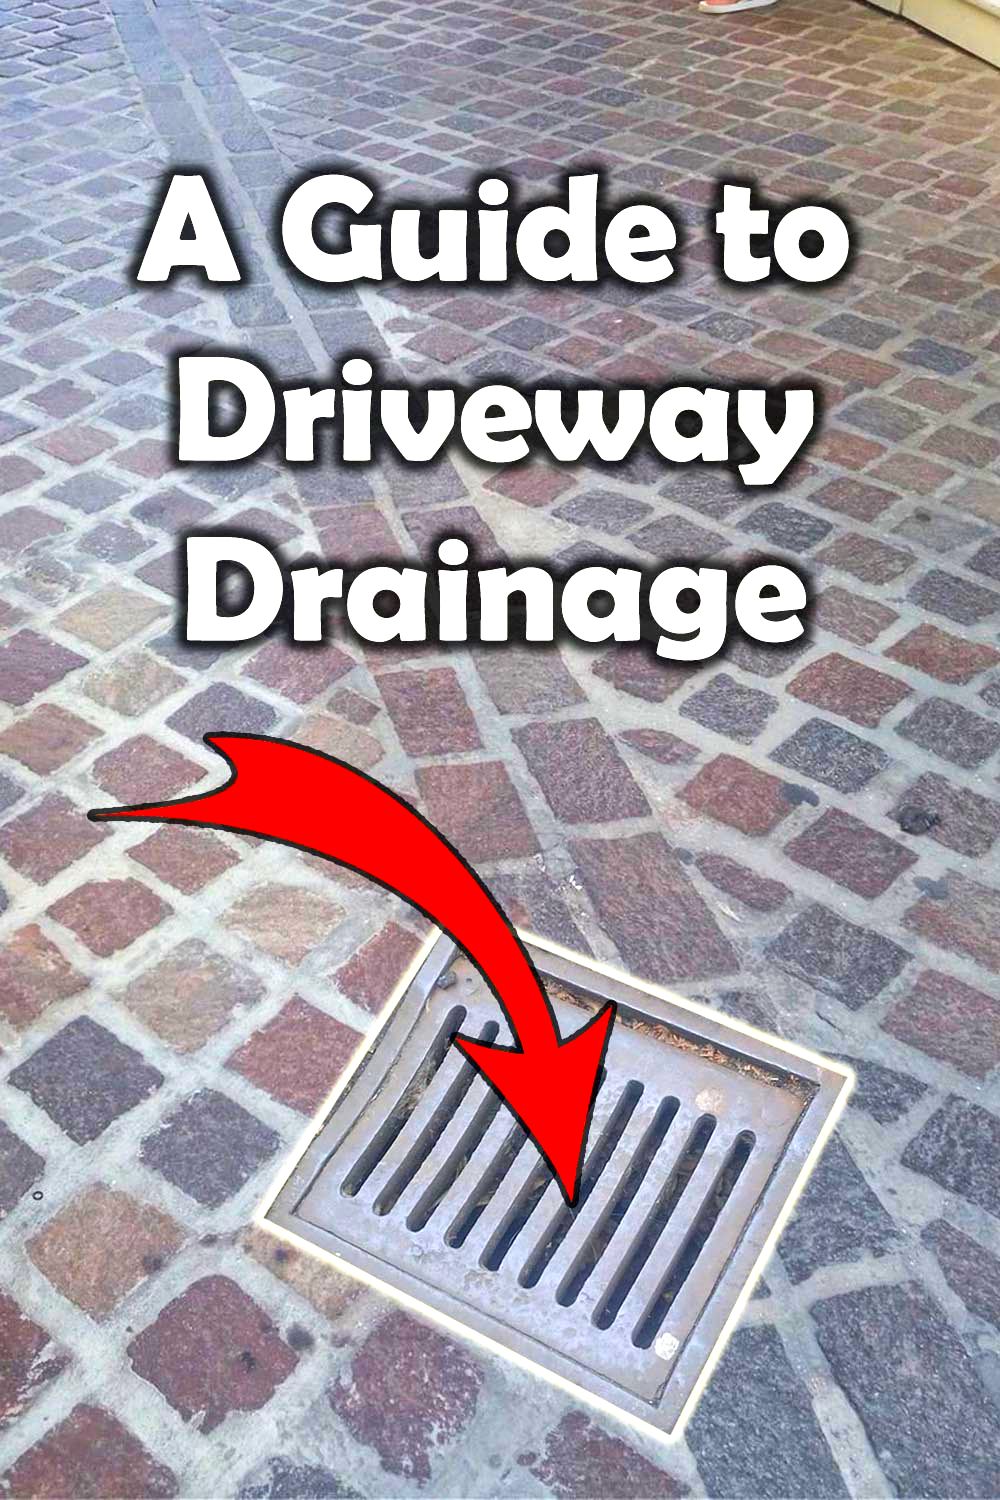 Driveway drainage